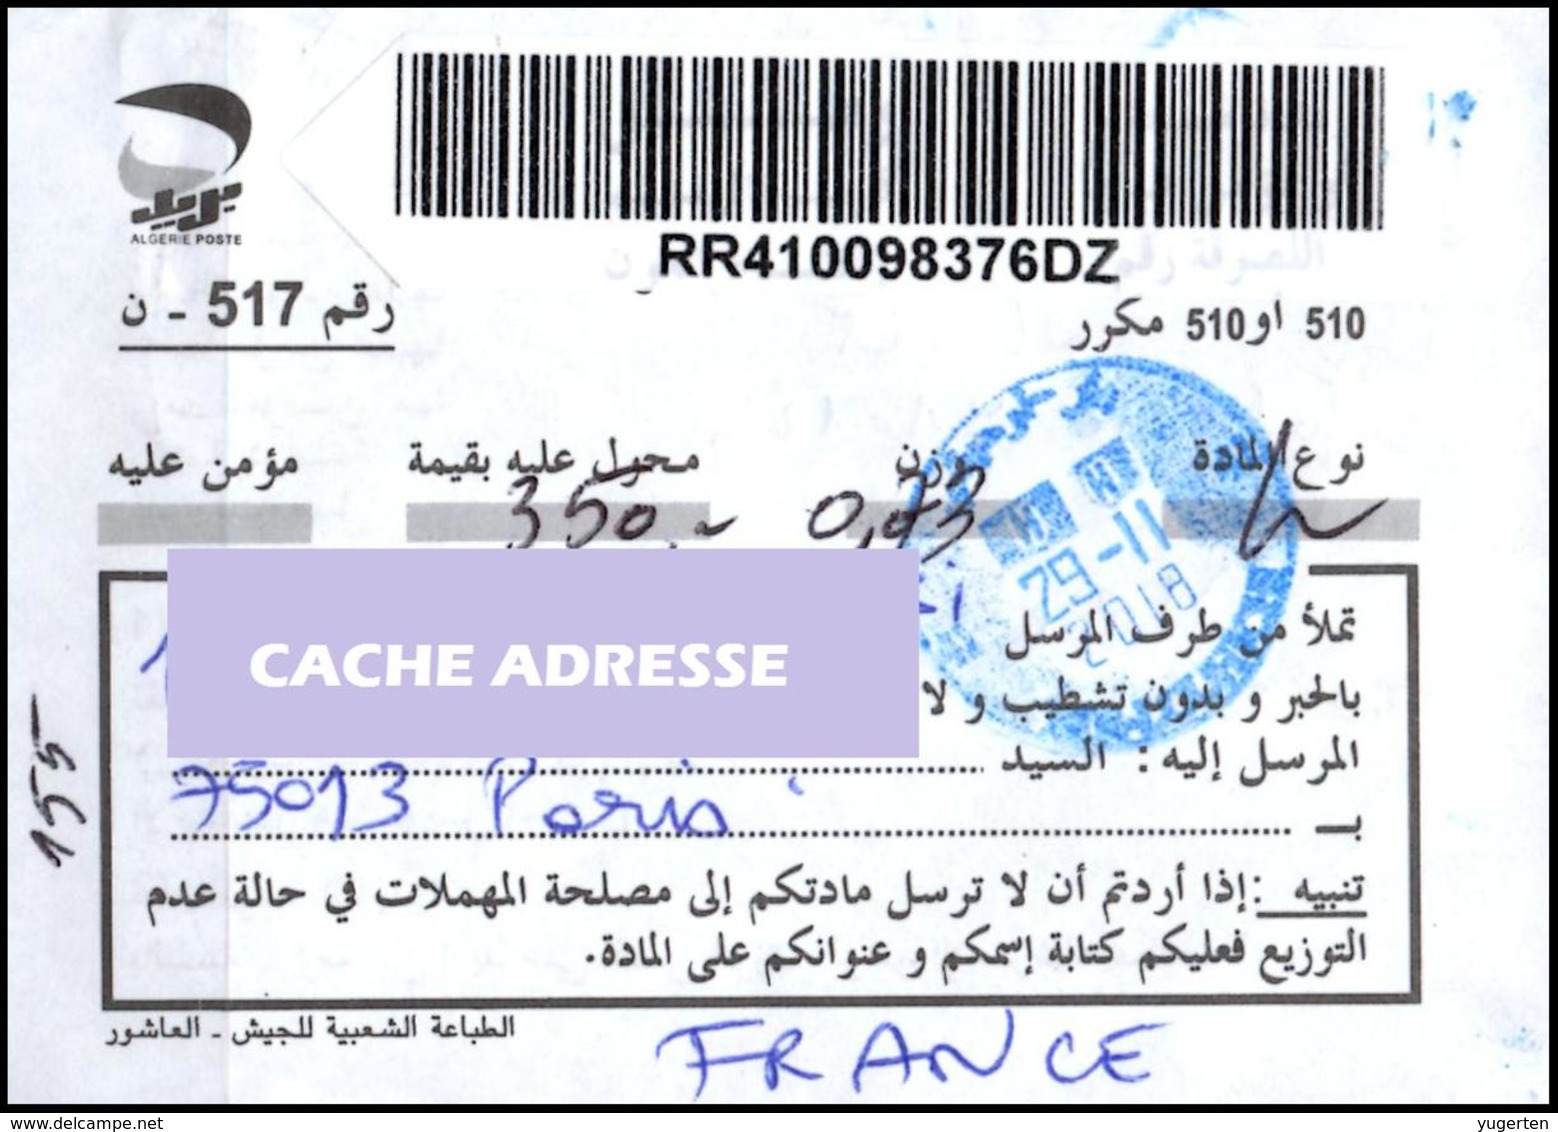 ALGERIJE Receipt Of Registered Cover To France 2018 Bar Code Label Code Barres Etiquette De Recommandation - Poste